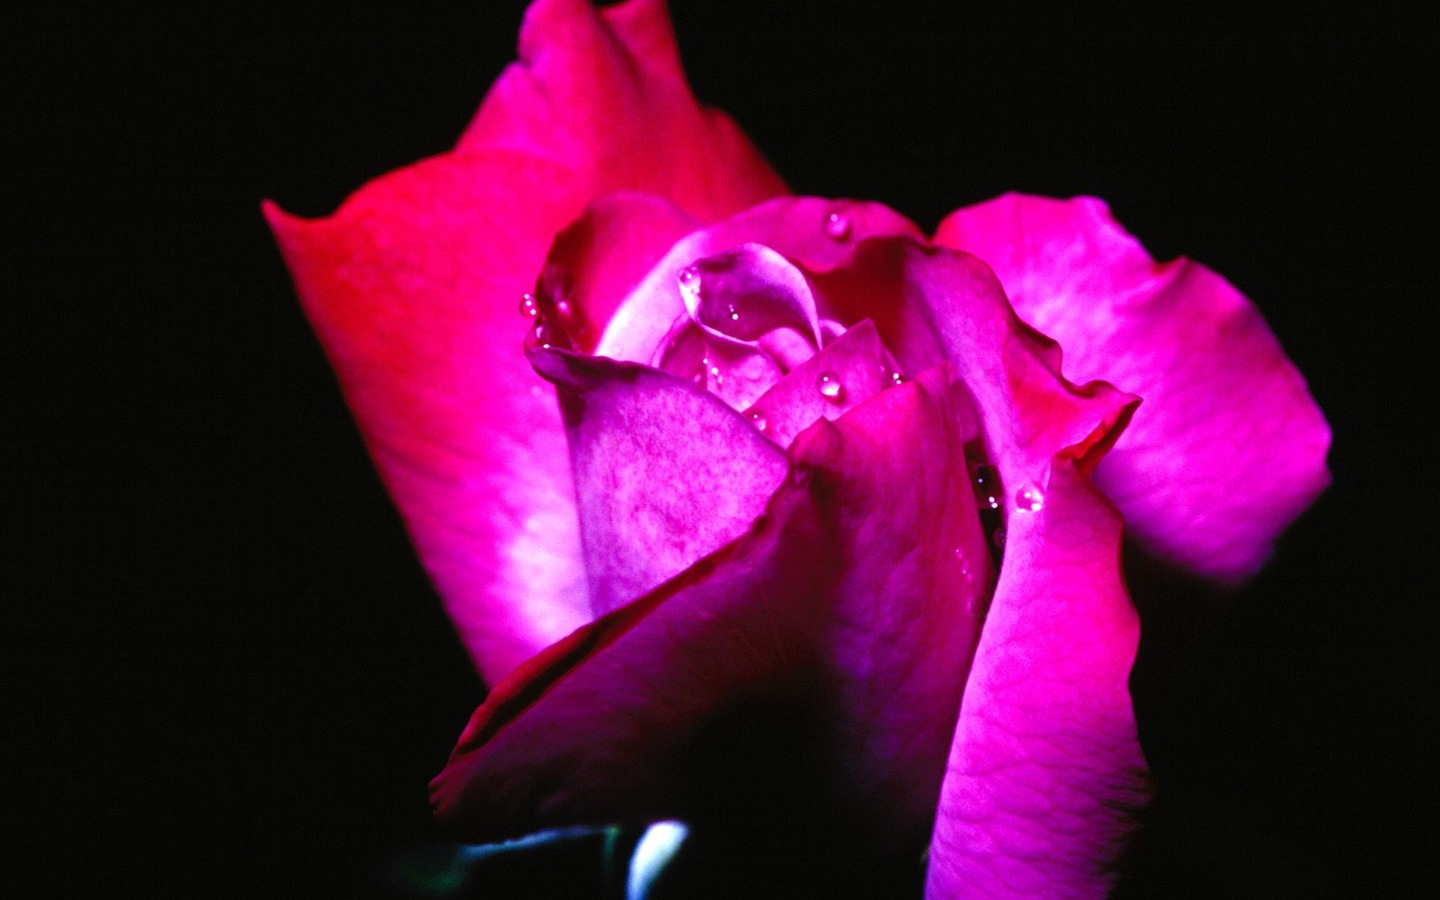 Flowers close-up (18) #4 - 1440x900